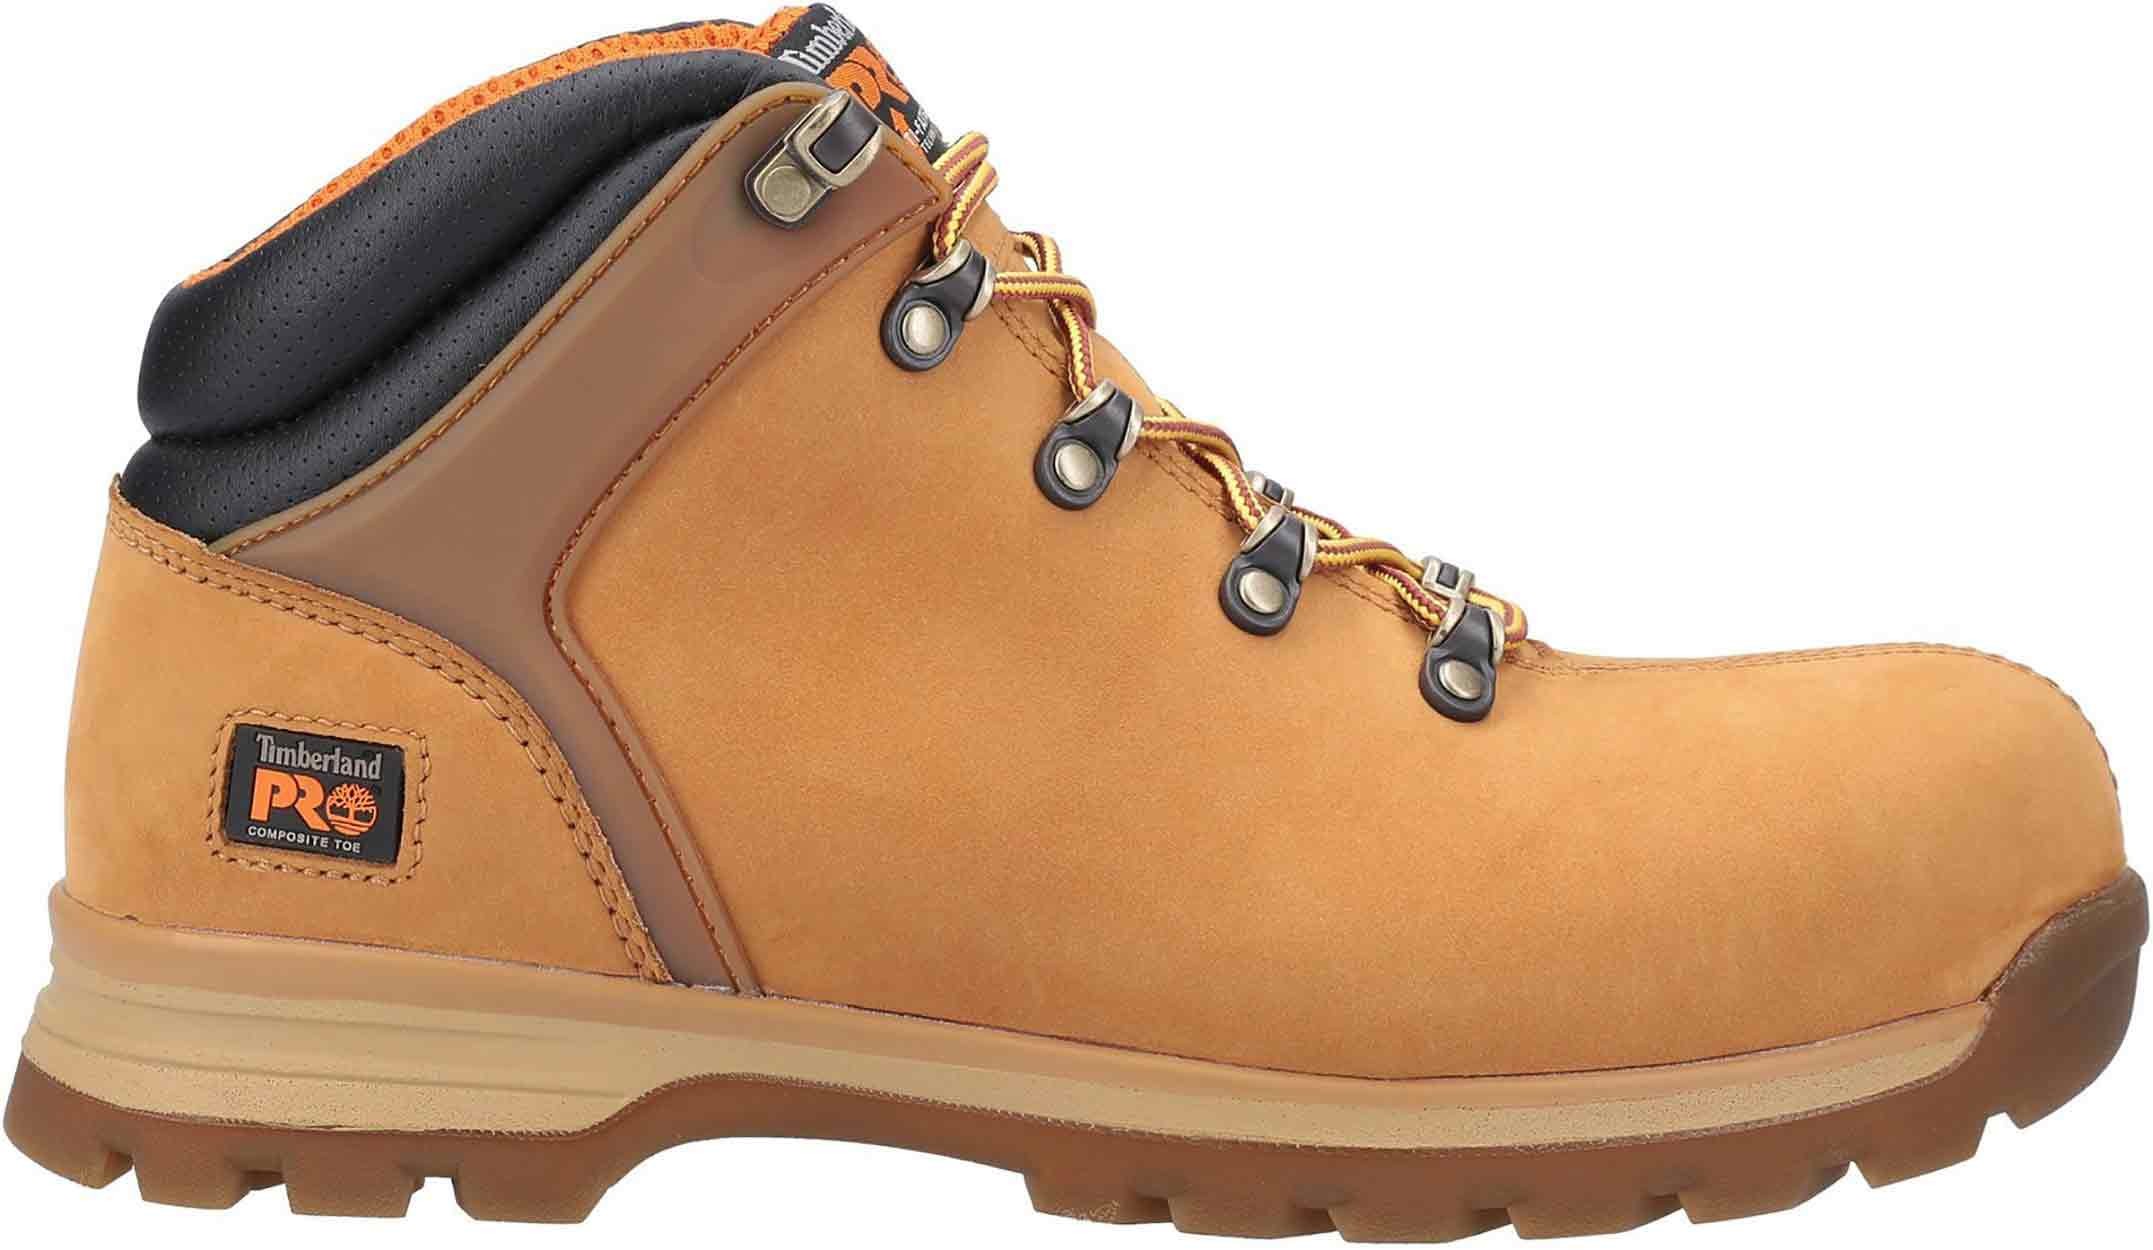 Timberland Pro Splitrock Boots Hot Sale, SAVE 31% - aveclumiere.com